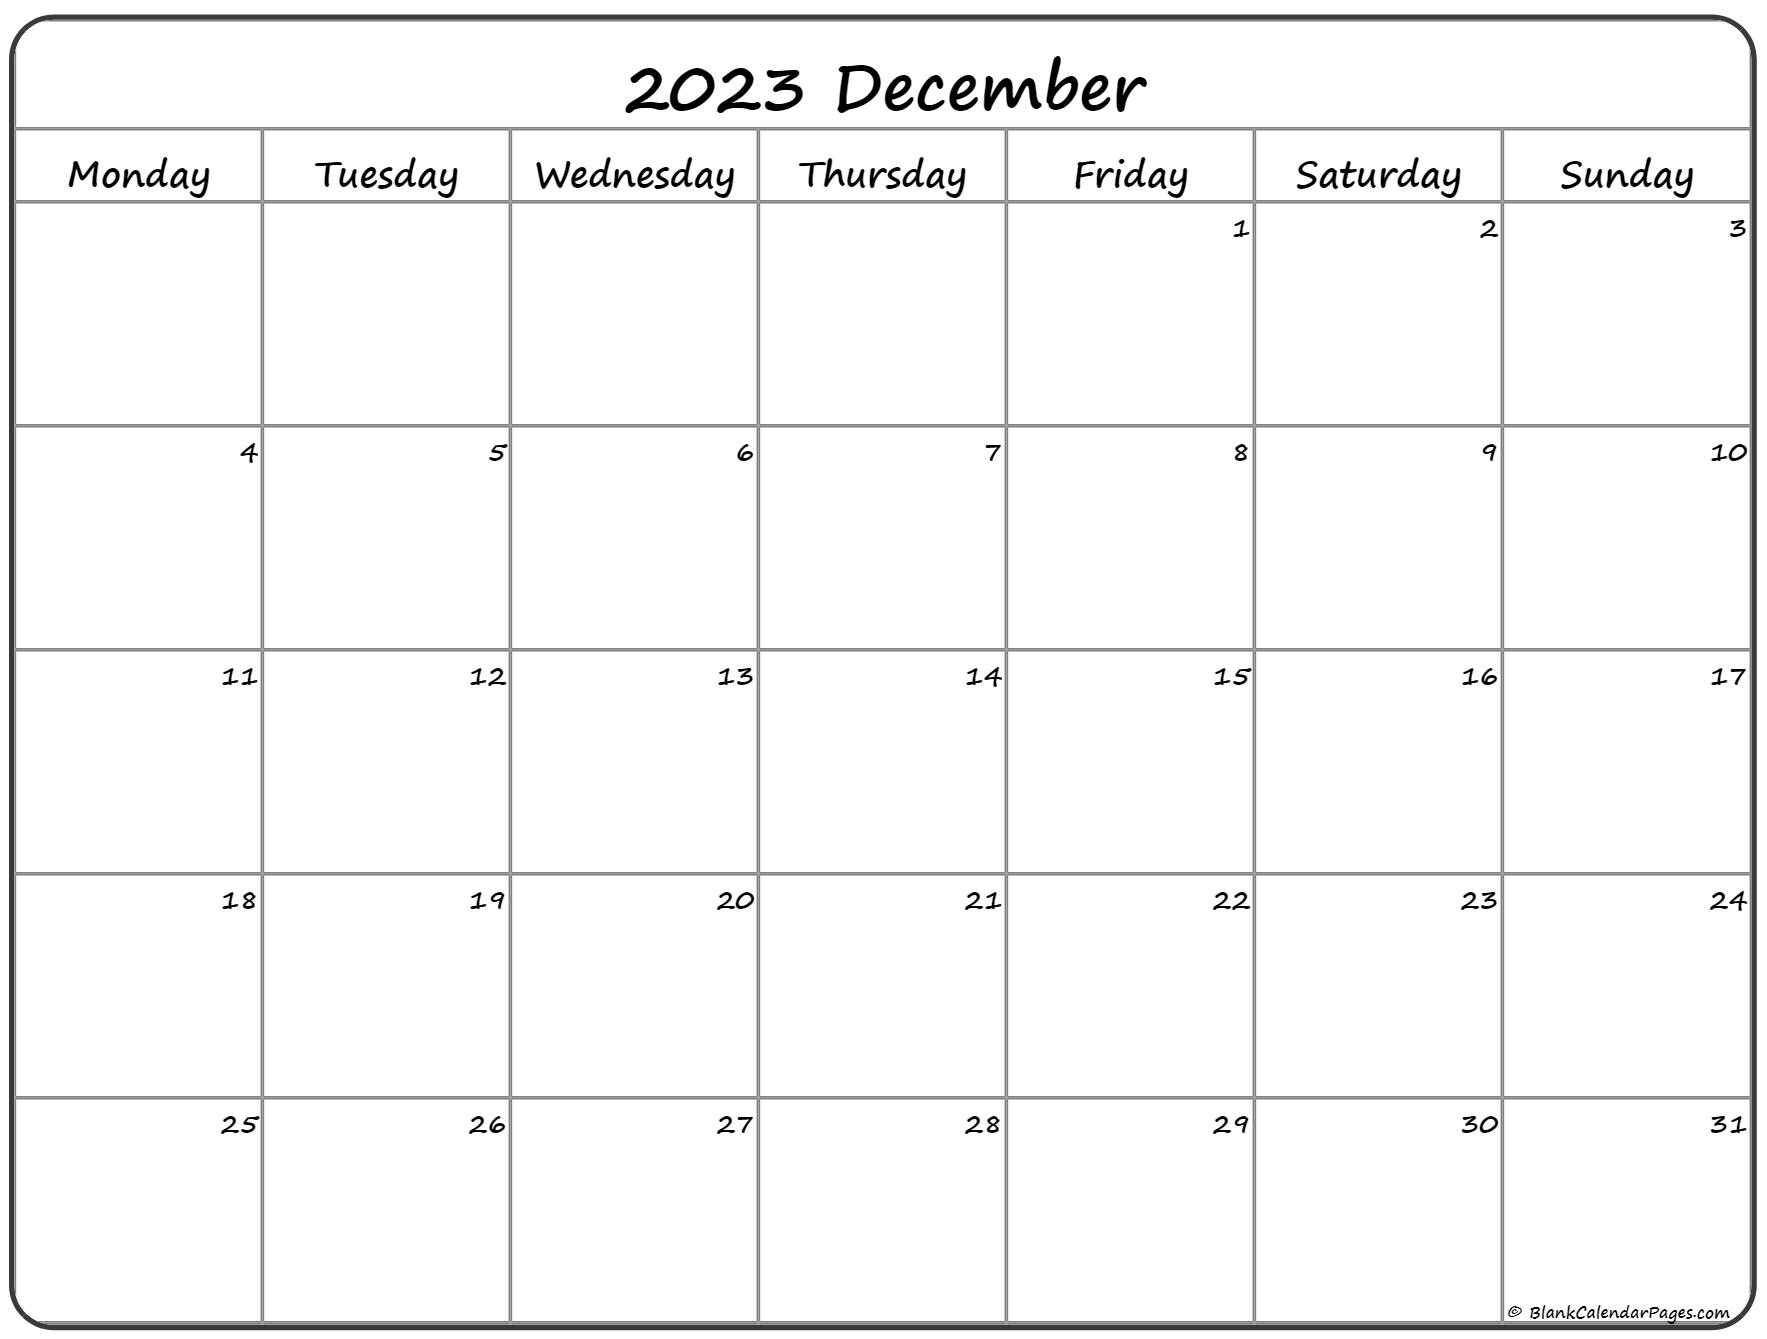 December 2023 Monday Calendar Monday to Sunday